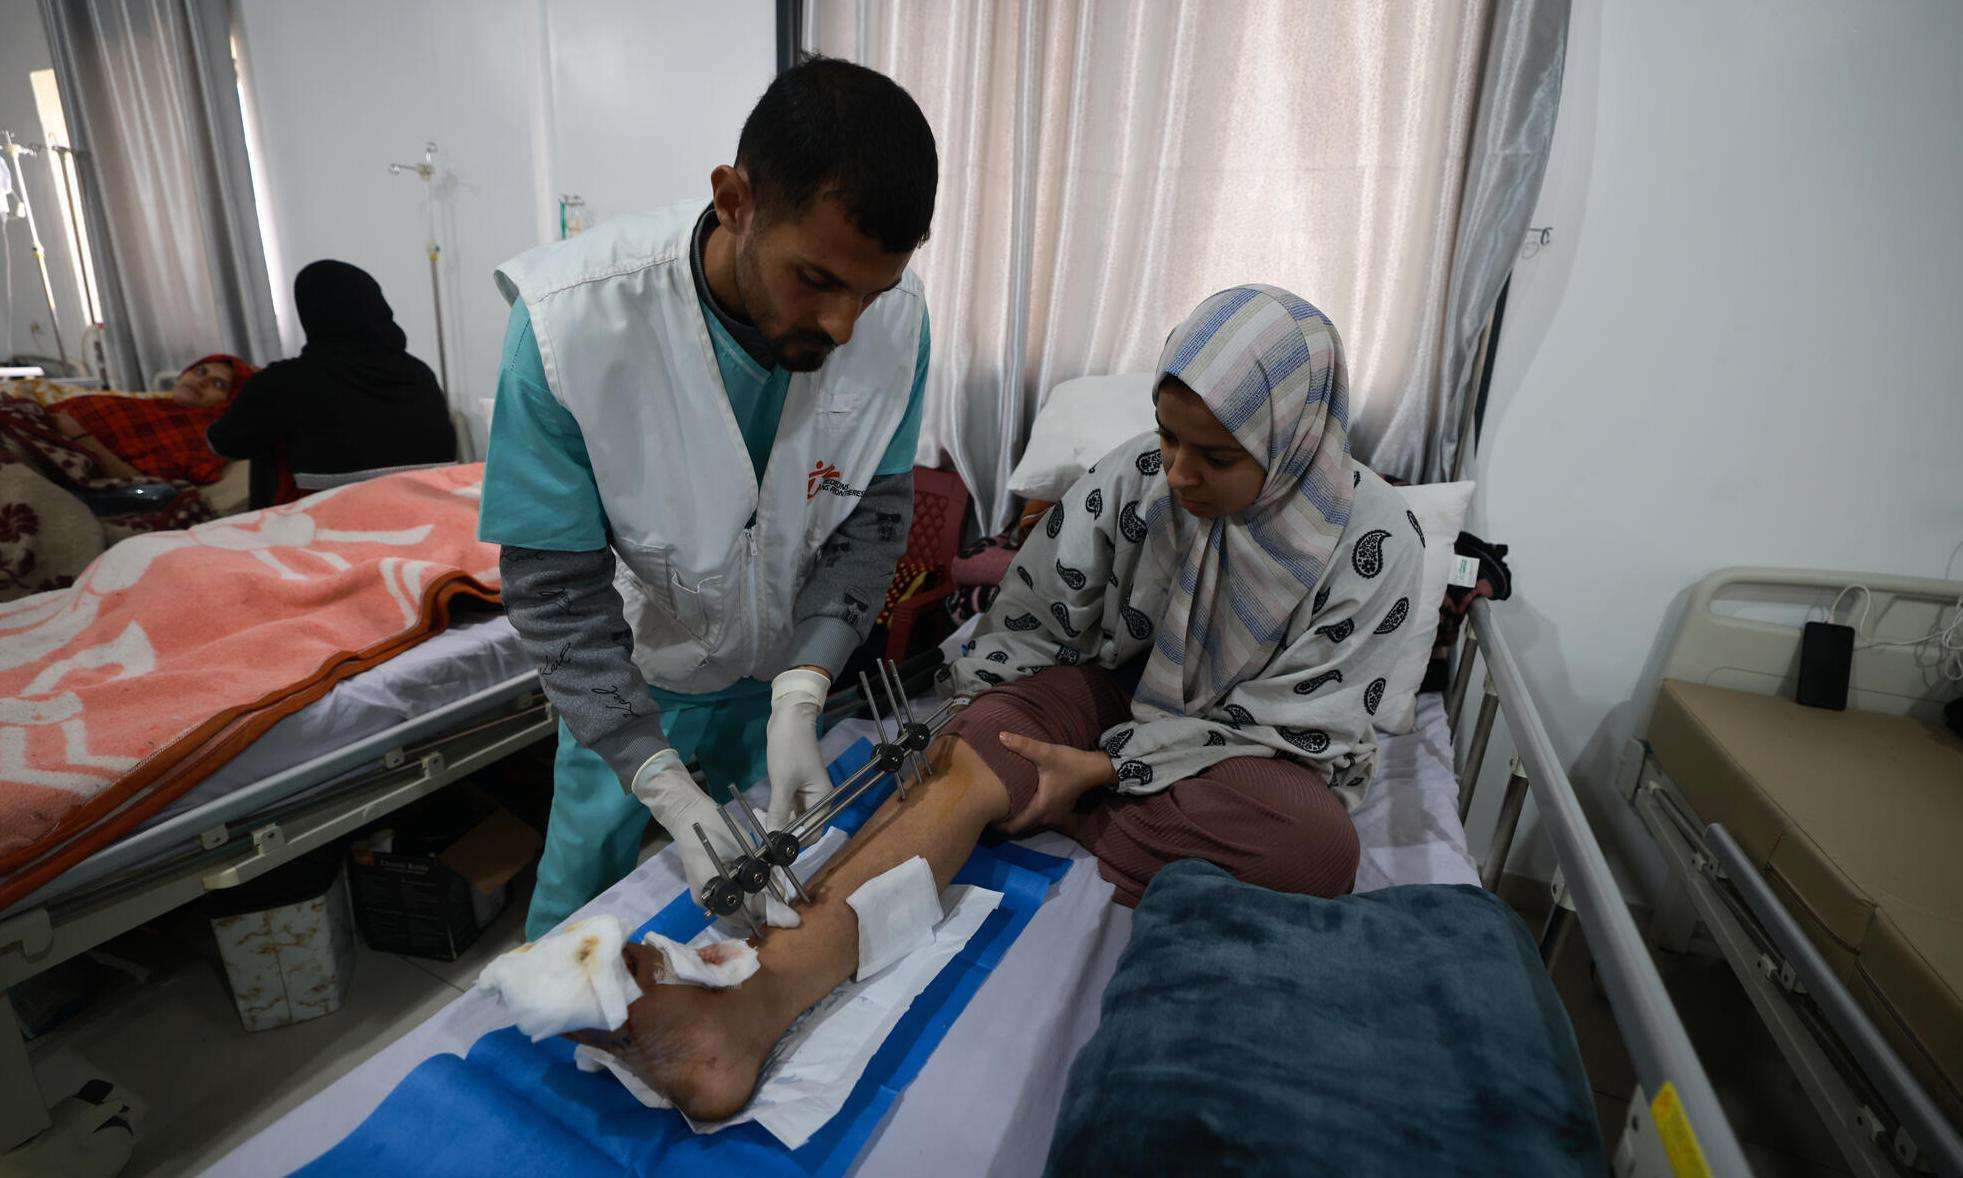 An MSF staff member treats a patient at Rafah Indonesian Field Hospital in Gaza